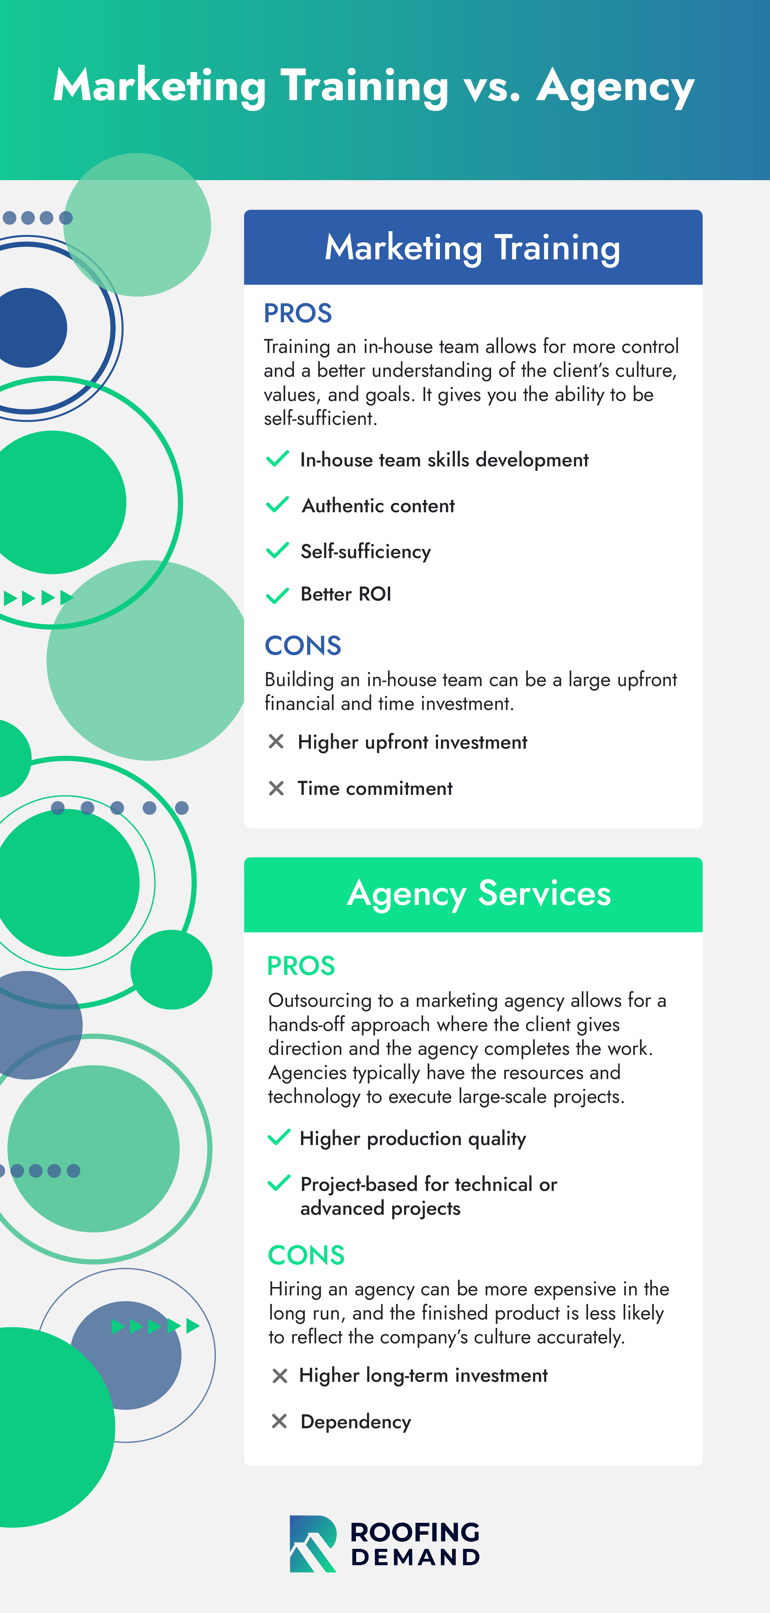 rd-agency-vs-training-infographic